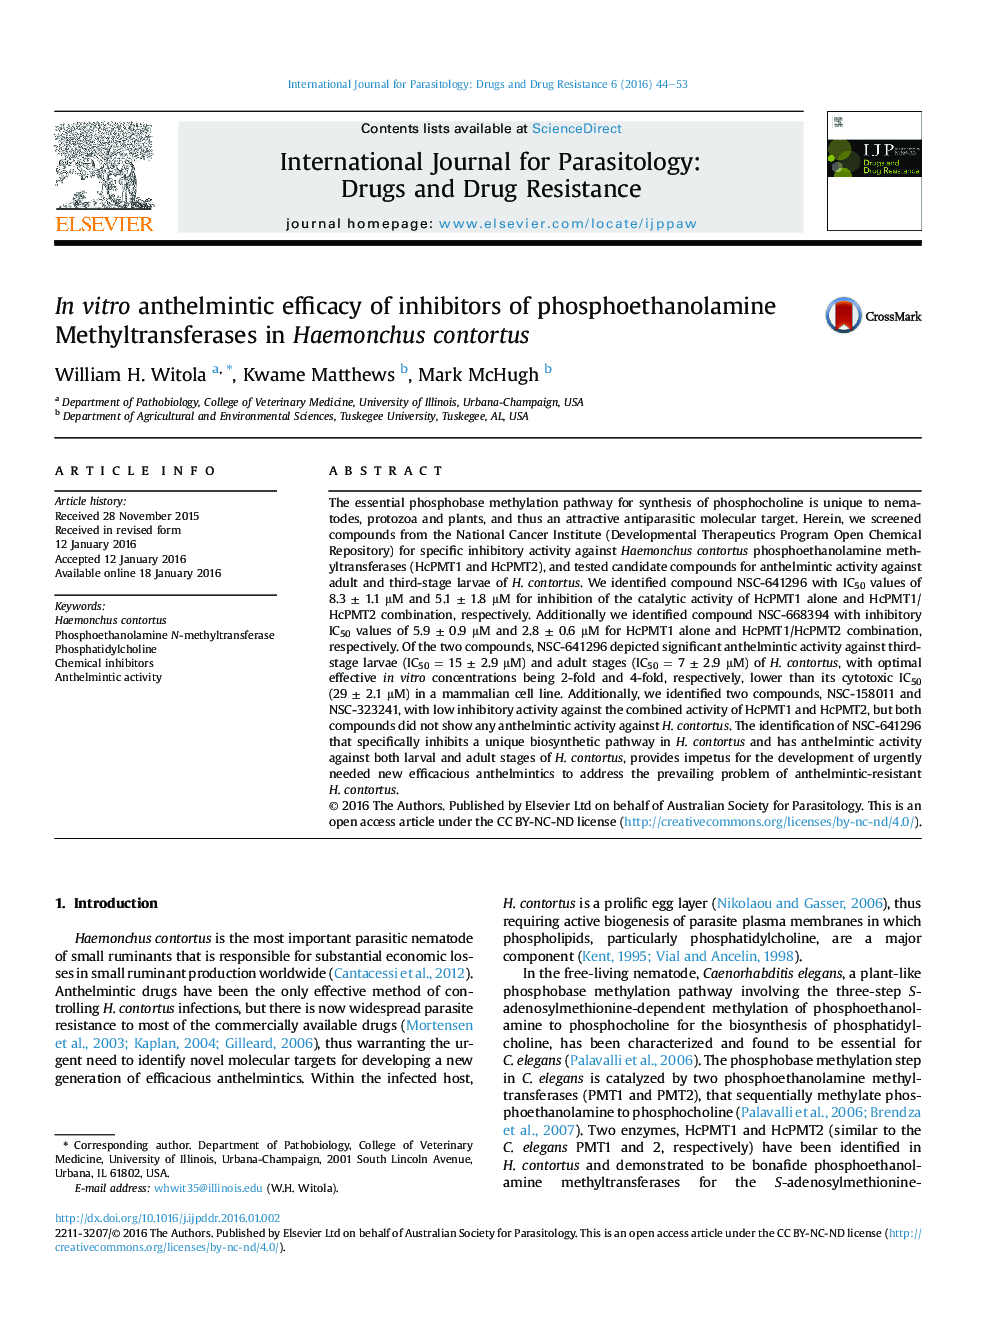 In vitro anthelmintic efficacy of inhibitors of phosphoethanolamine Methyltransferases in Haemonchus contortus